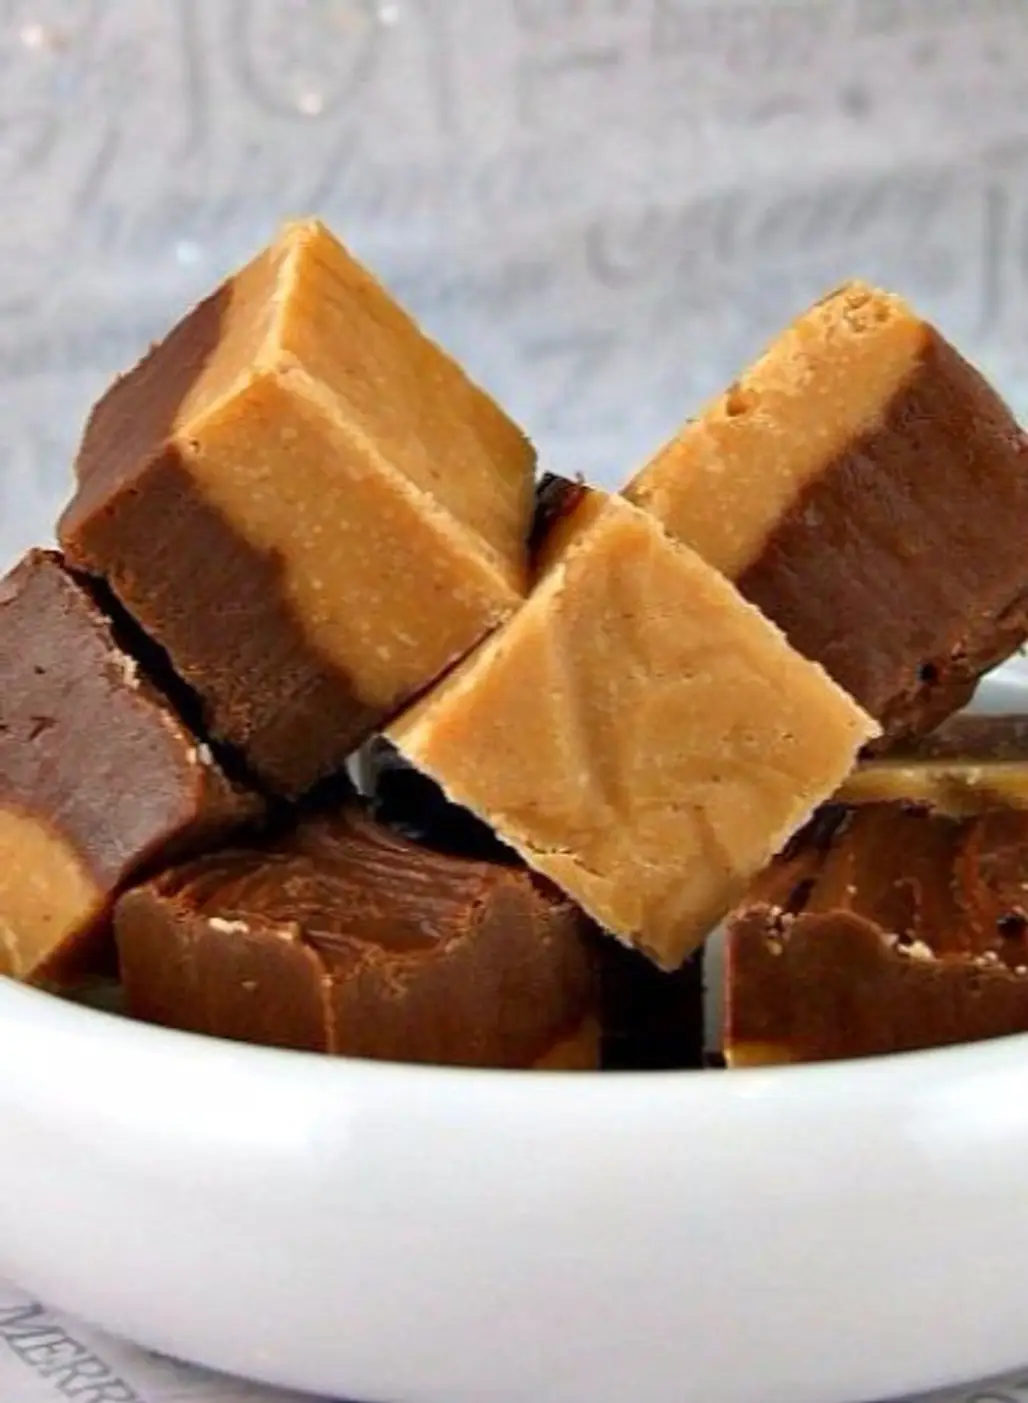 Chocolate- Peanut Butter Fudge